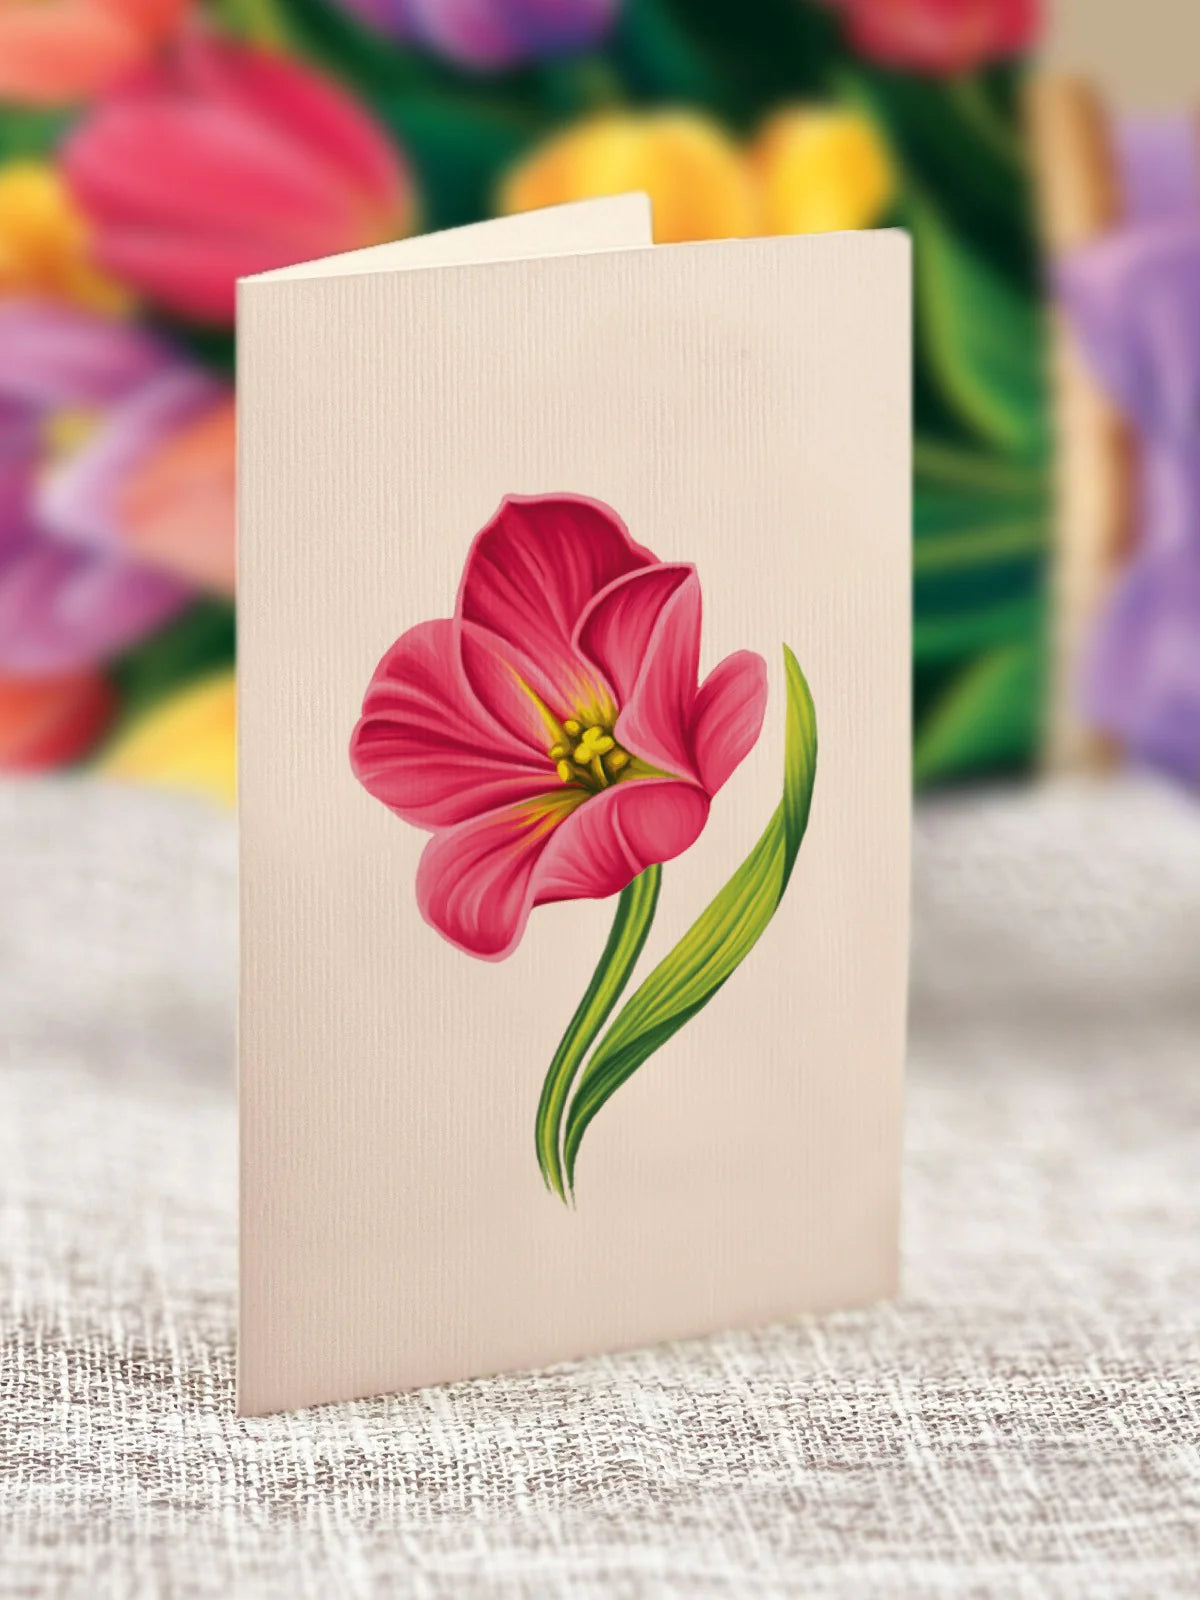 Festive Tulips Pop Up Flower Bouquet Greeting Card    